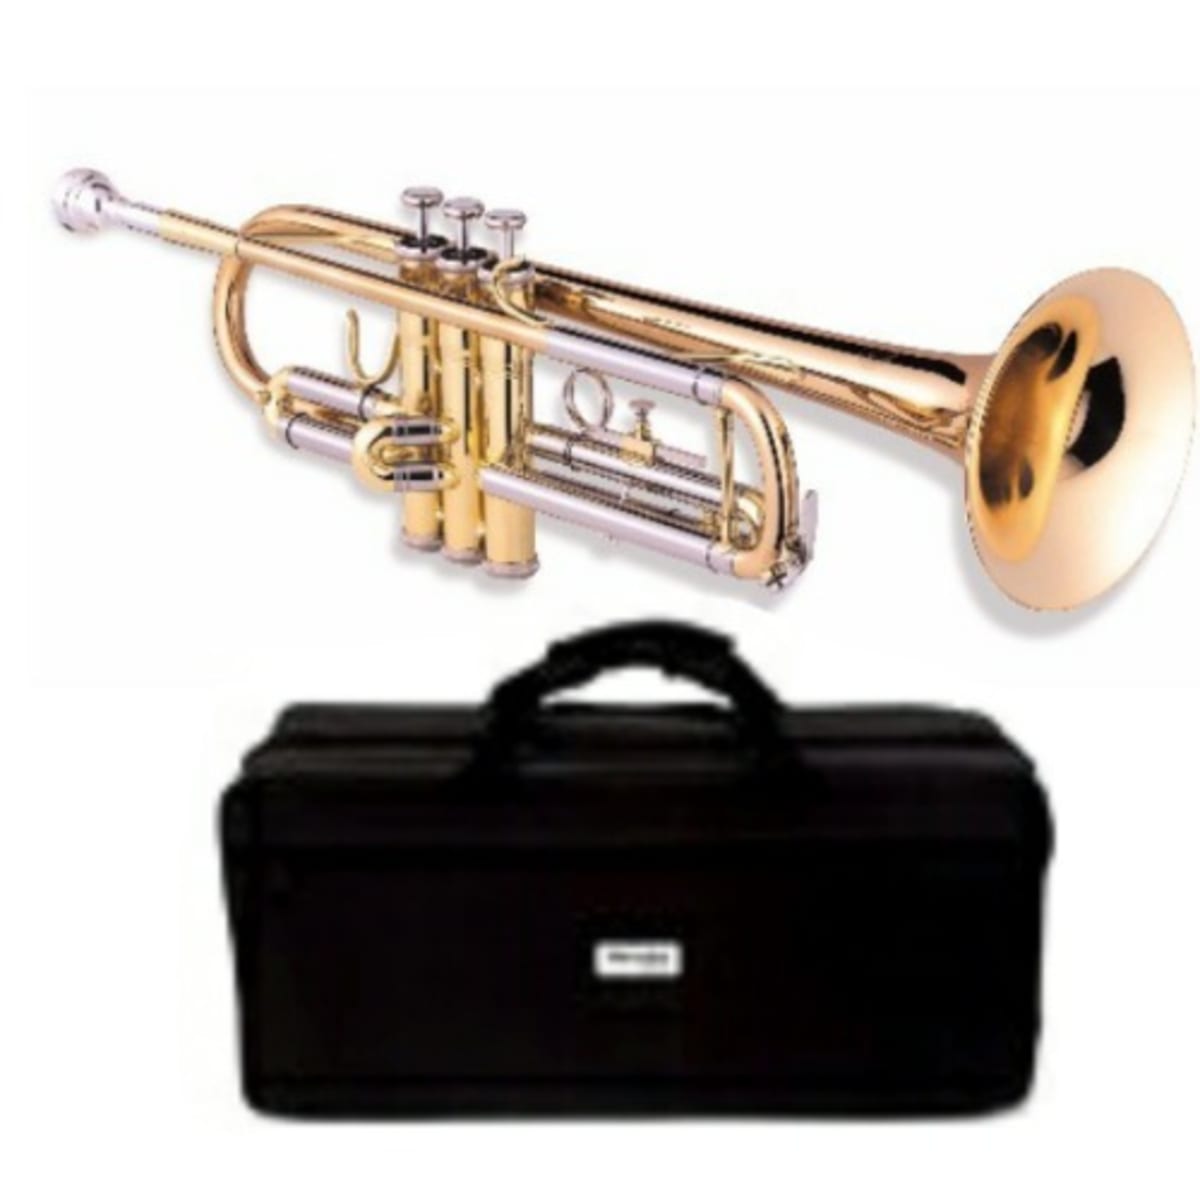 https://www-konga-com-res.cloudinary.com/w_400,f_auto,fl_lossy,dpr_3.0,q_auto/media/catalog/product/P/r/Professional-Trumpet-with-Accessories---Gold-7954420.jpg